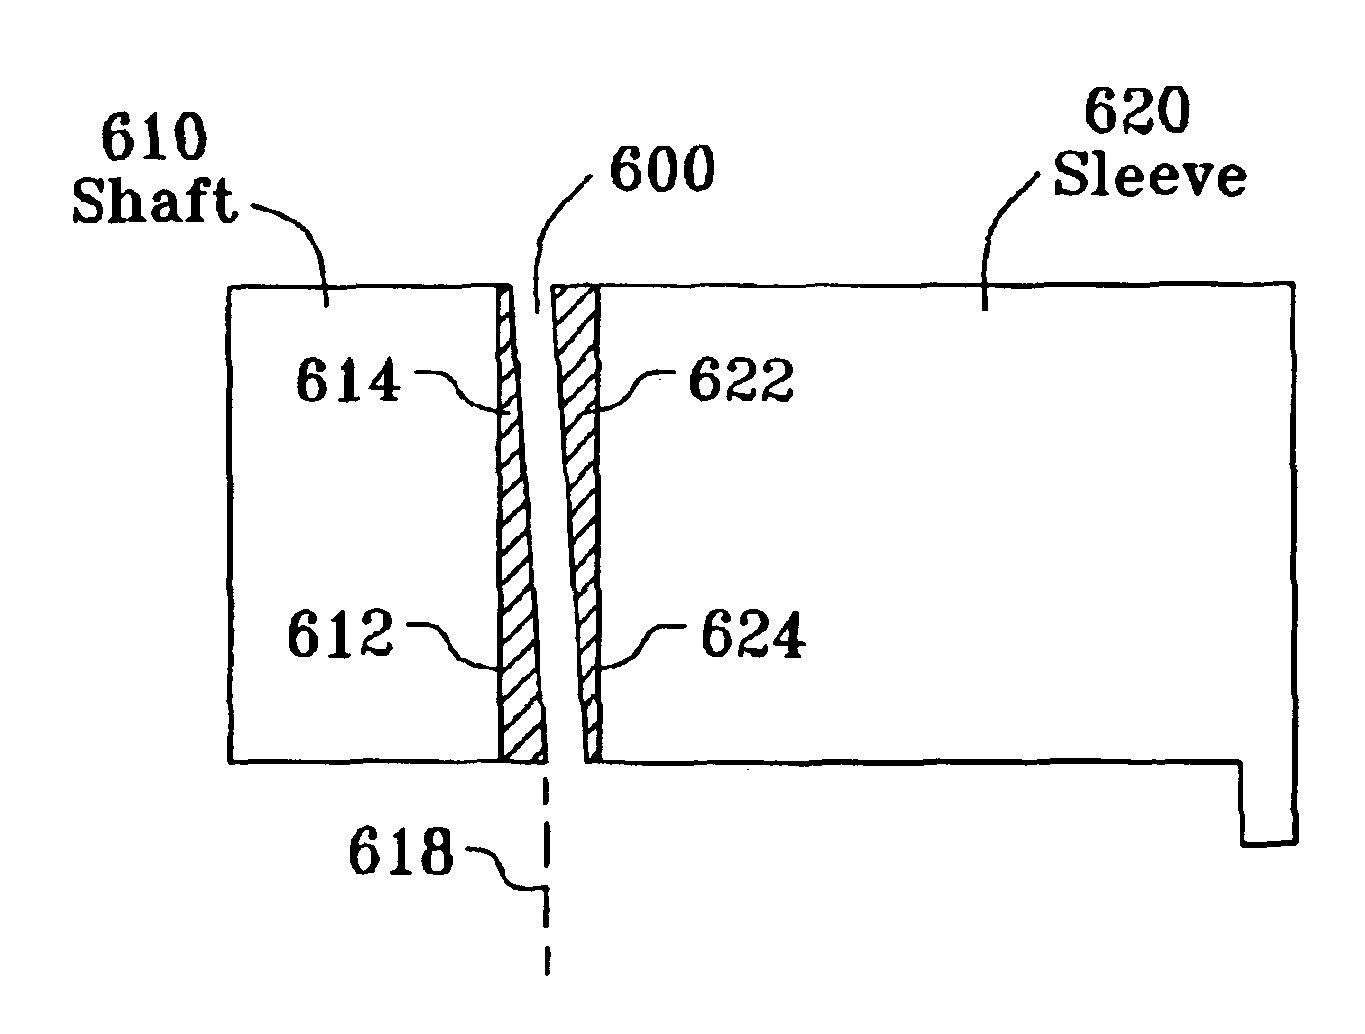 Refinement of spindle motor bearing gap